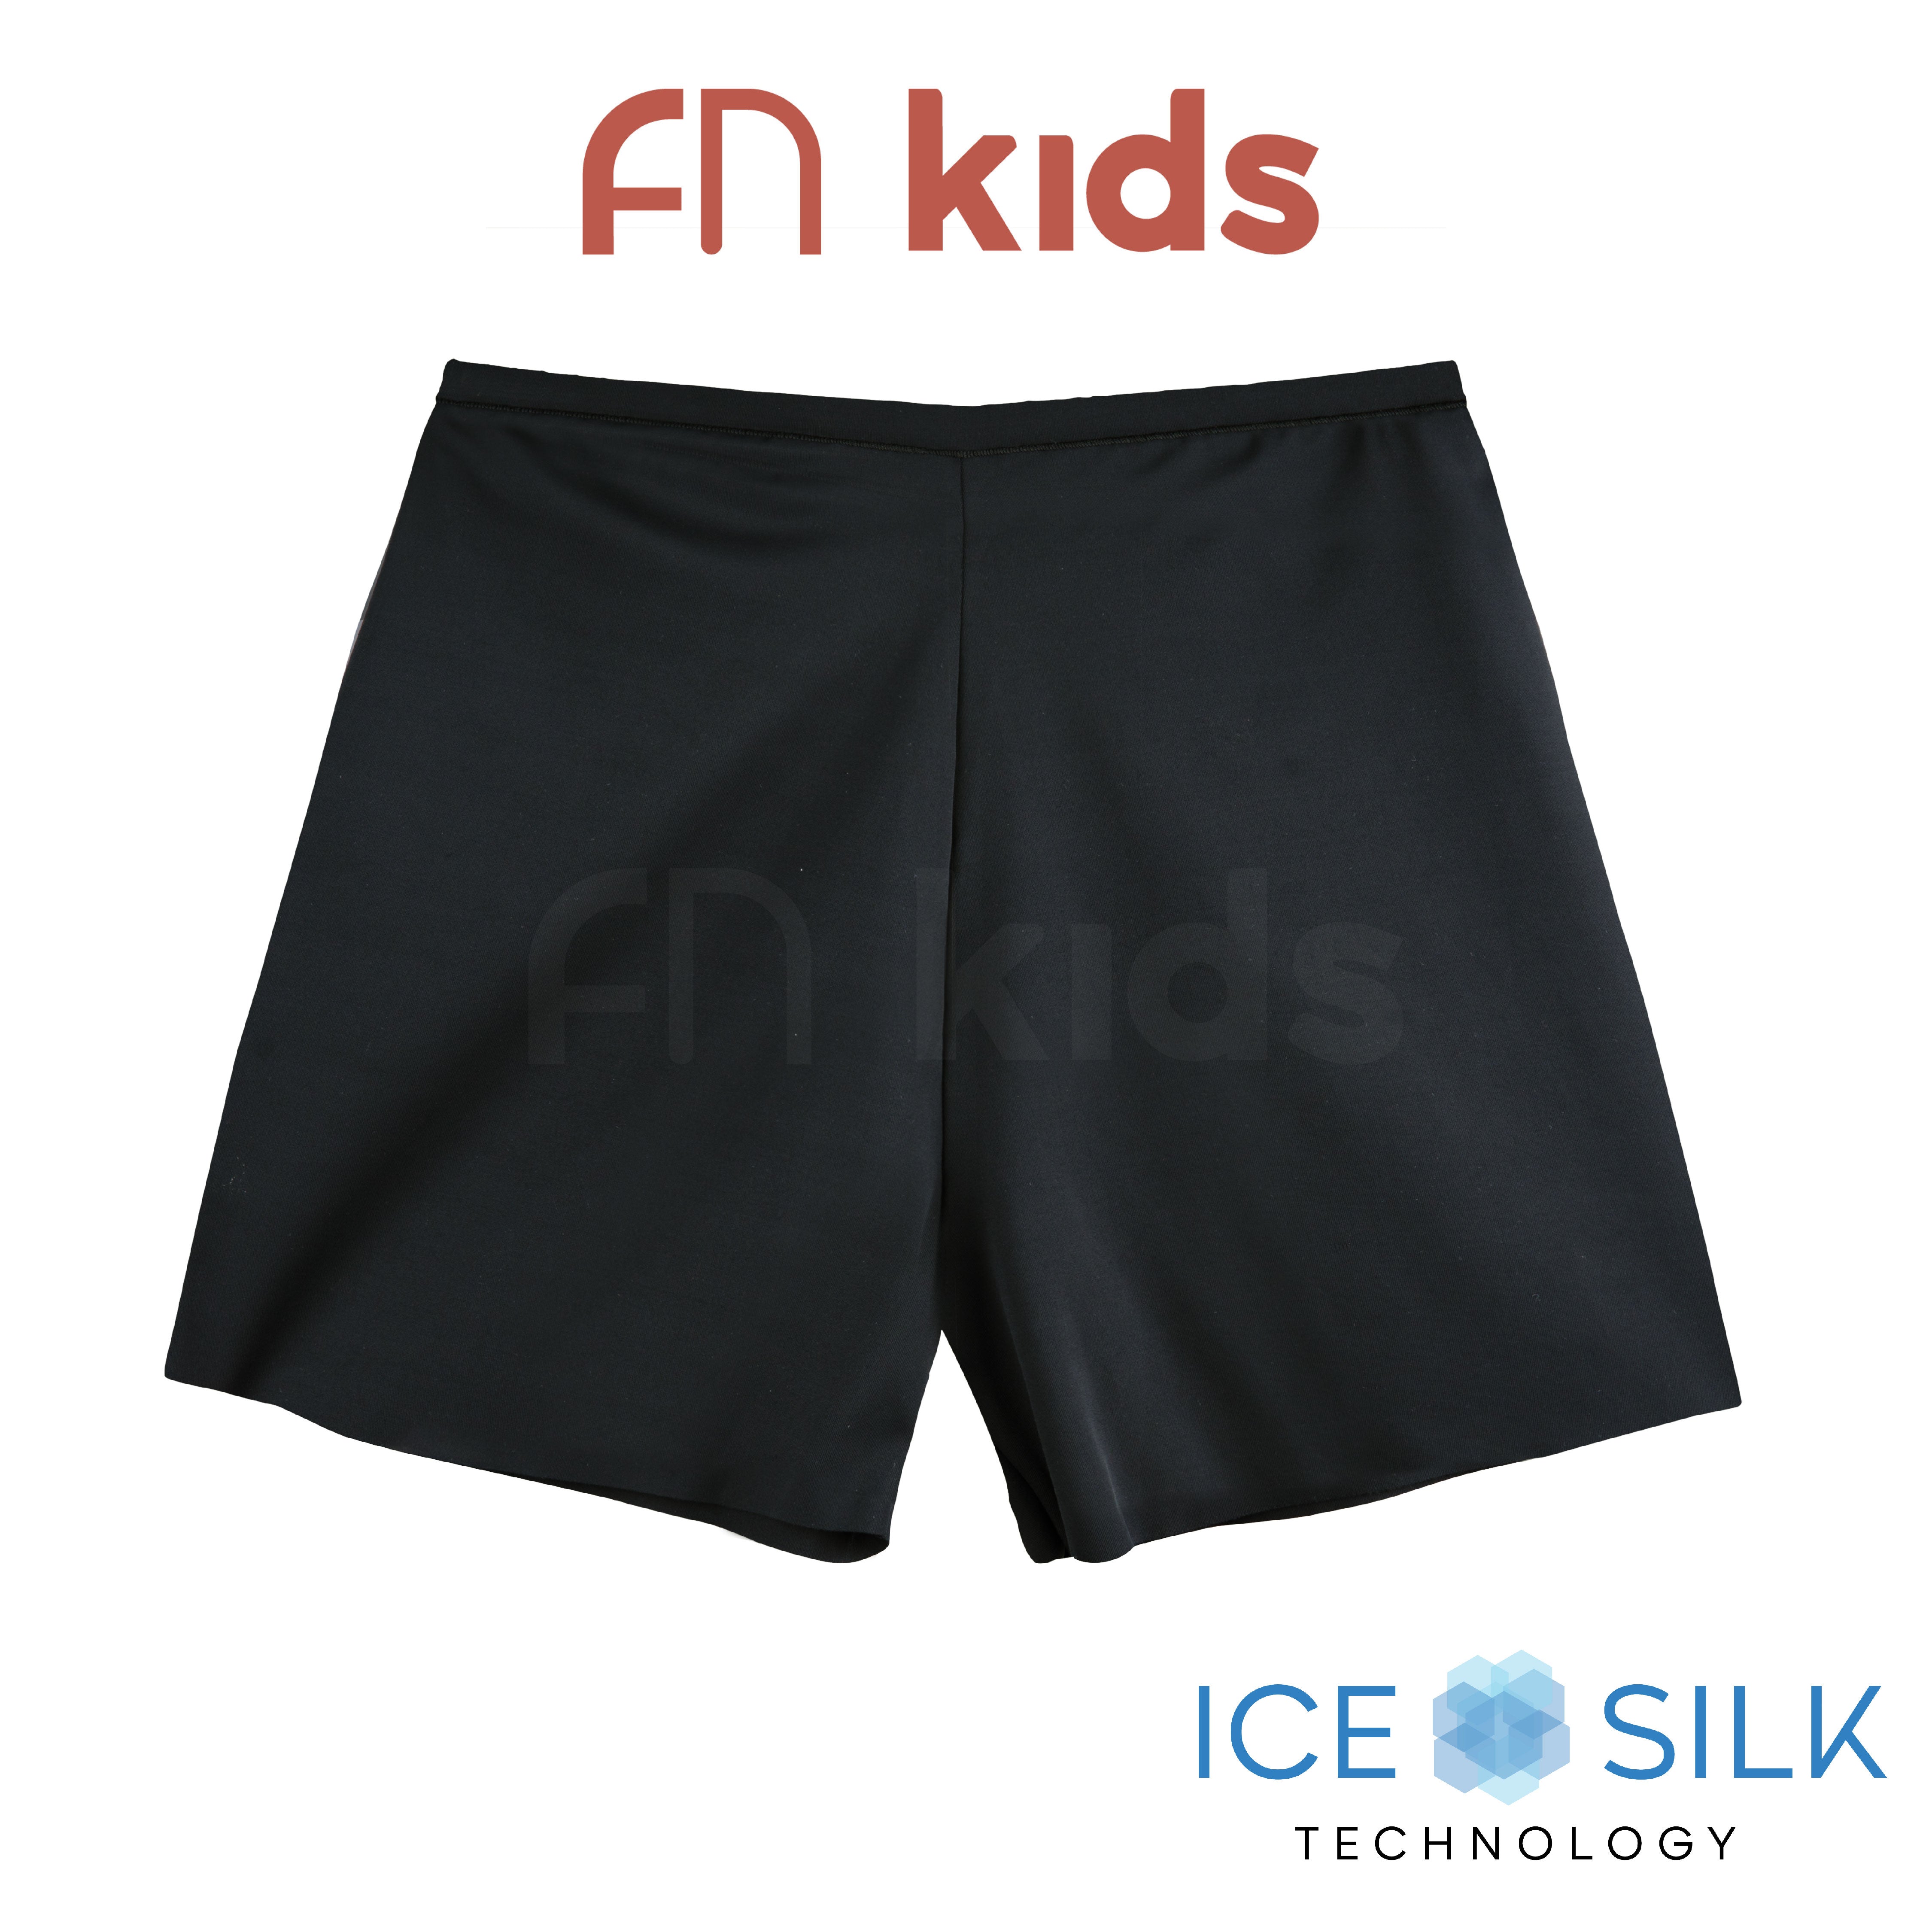 FN Kids short pants Anak Perempuan Ice Silk Celana Ketat Strit Cewek Nylon 1 Pcs NTKC 3441